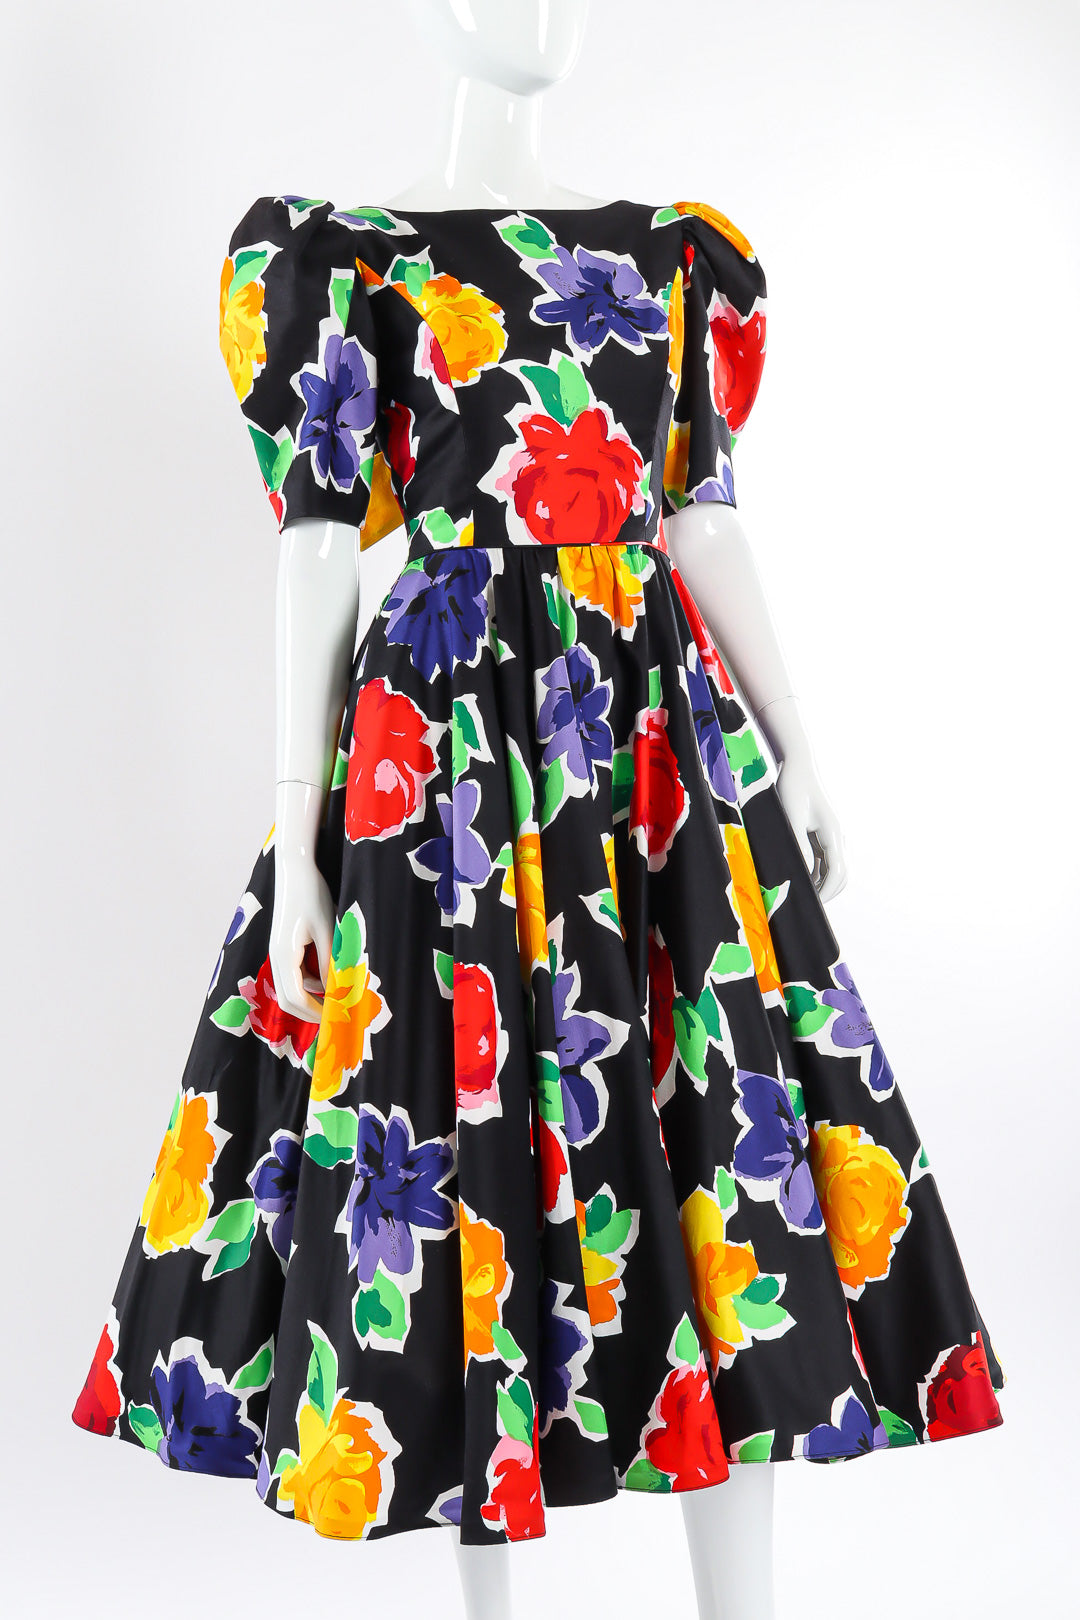 Petticoat dress by Victor Costa mannequin 3/4 @recessla